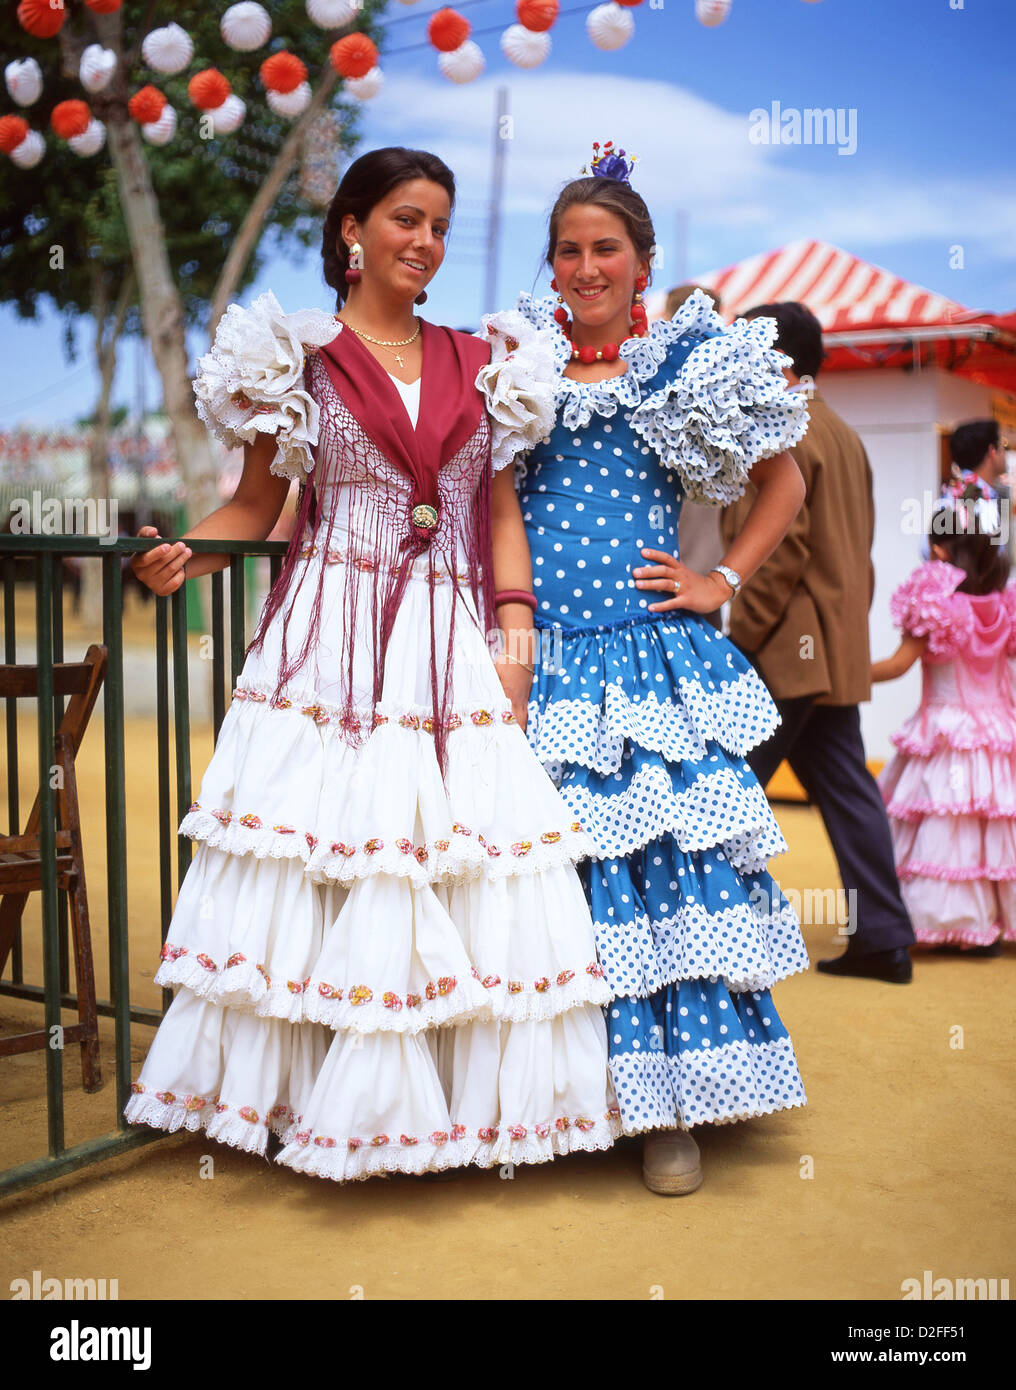 Young women in flamenco dresses at Feria de abril de Sevilla (Seville ...